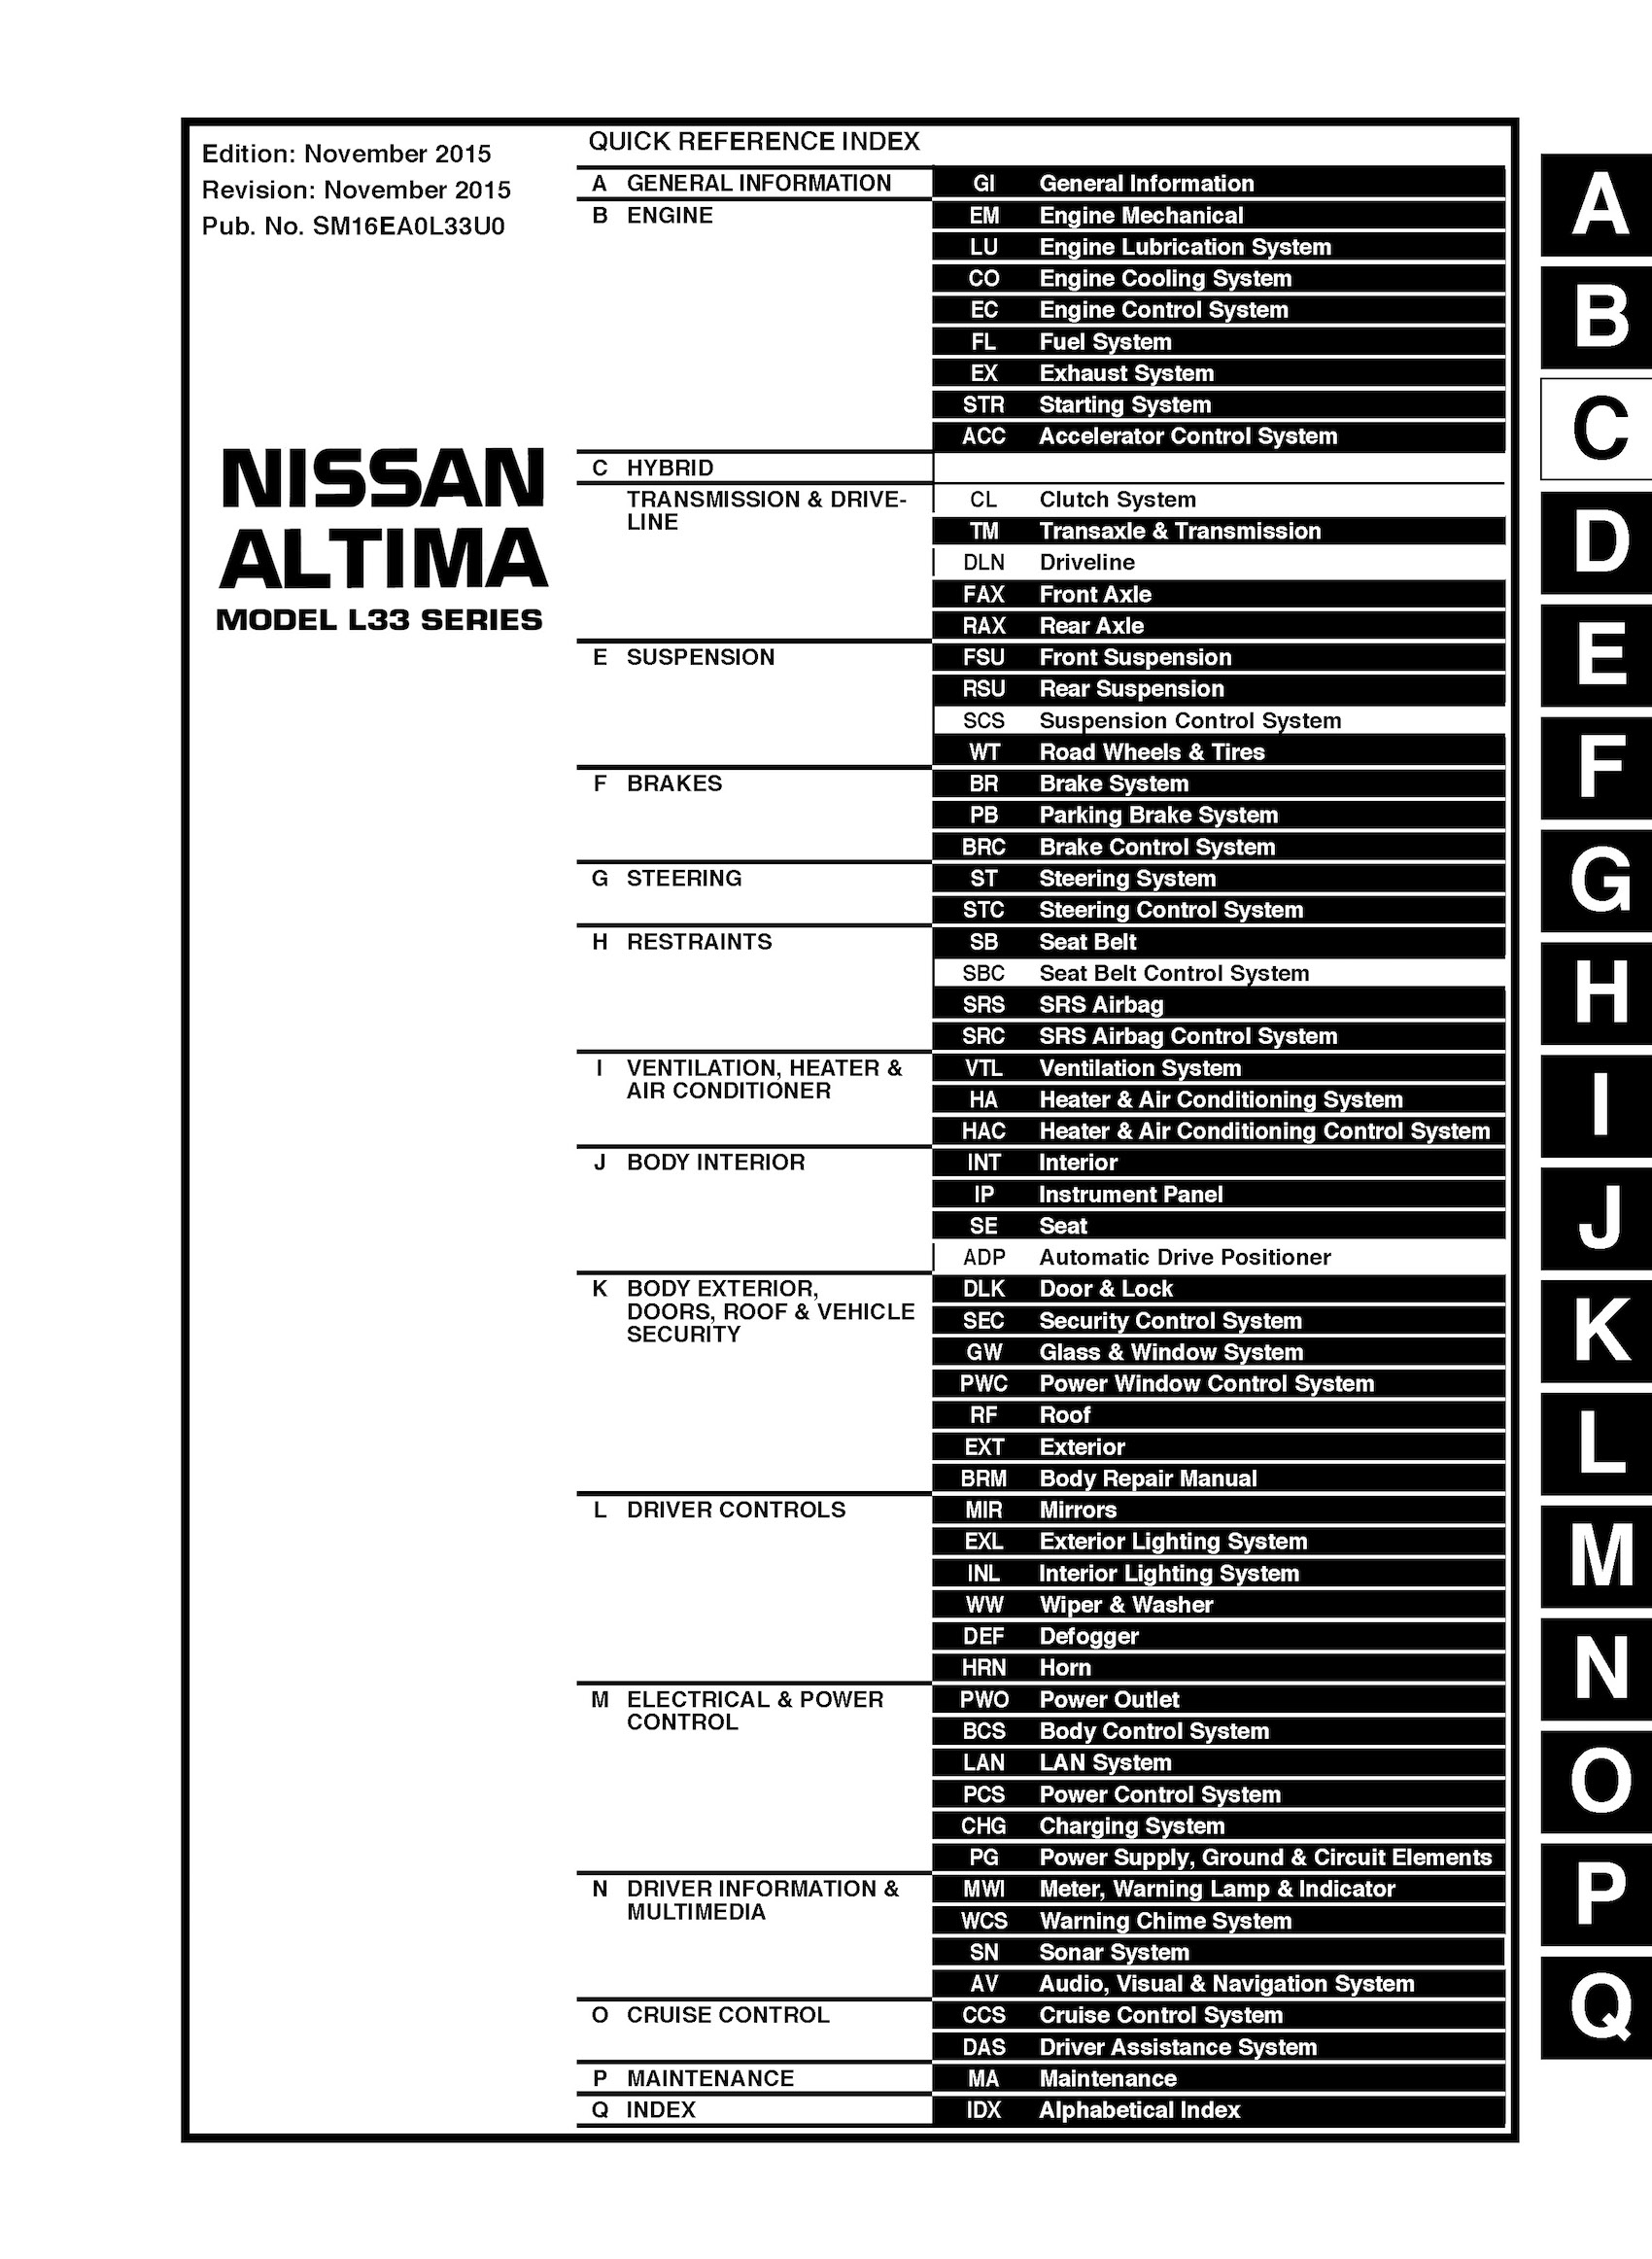 Table of Contents 2016 Nissan Altima Repair Manual